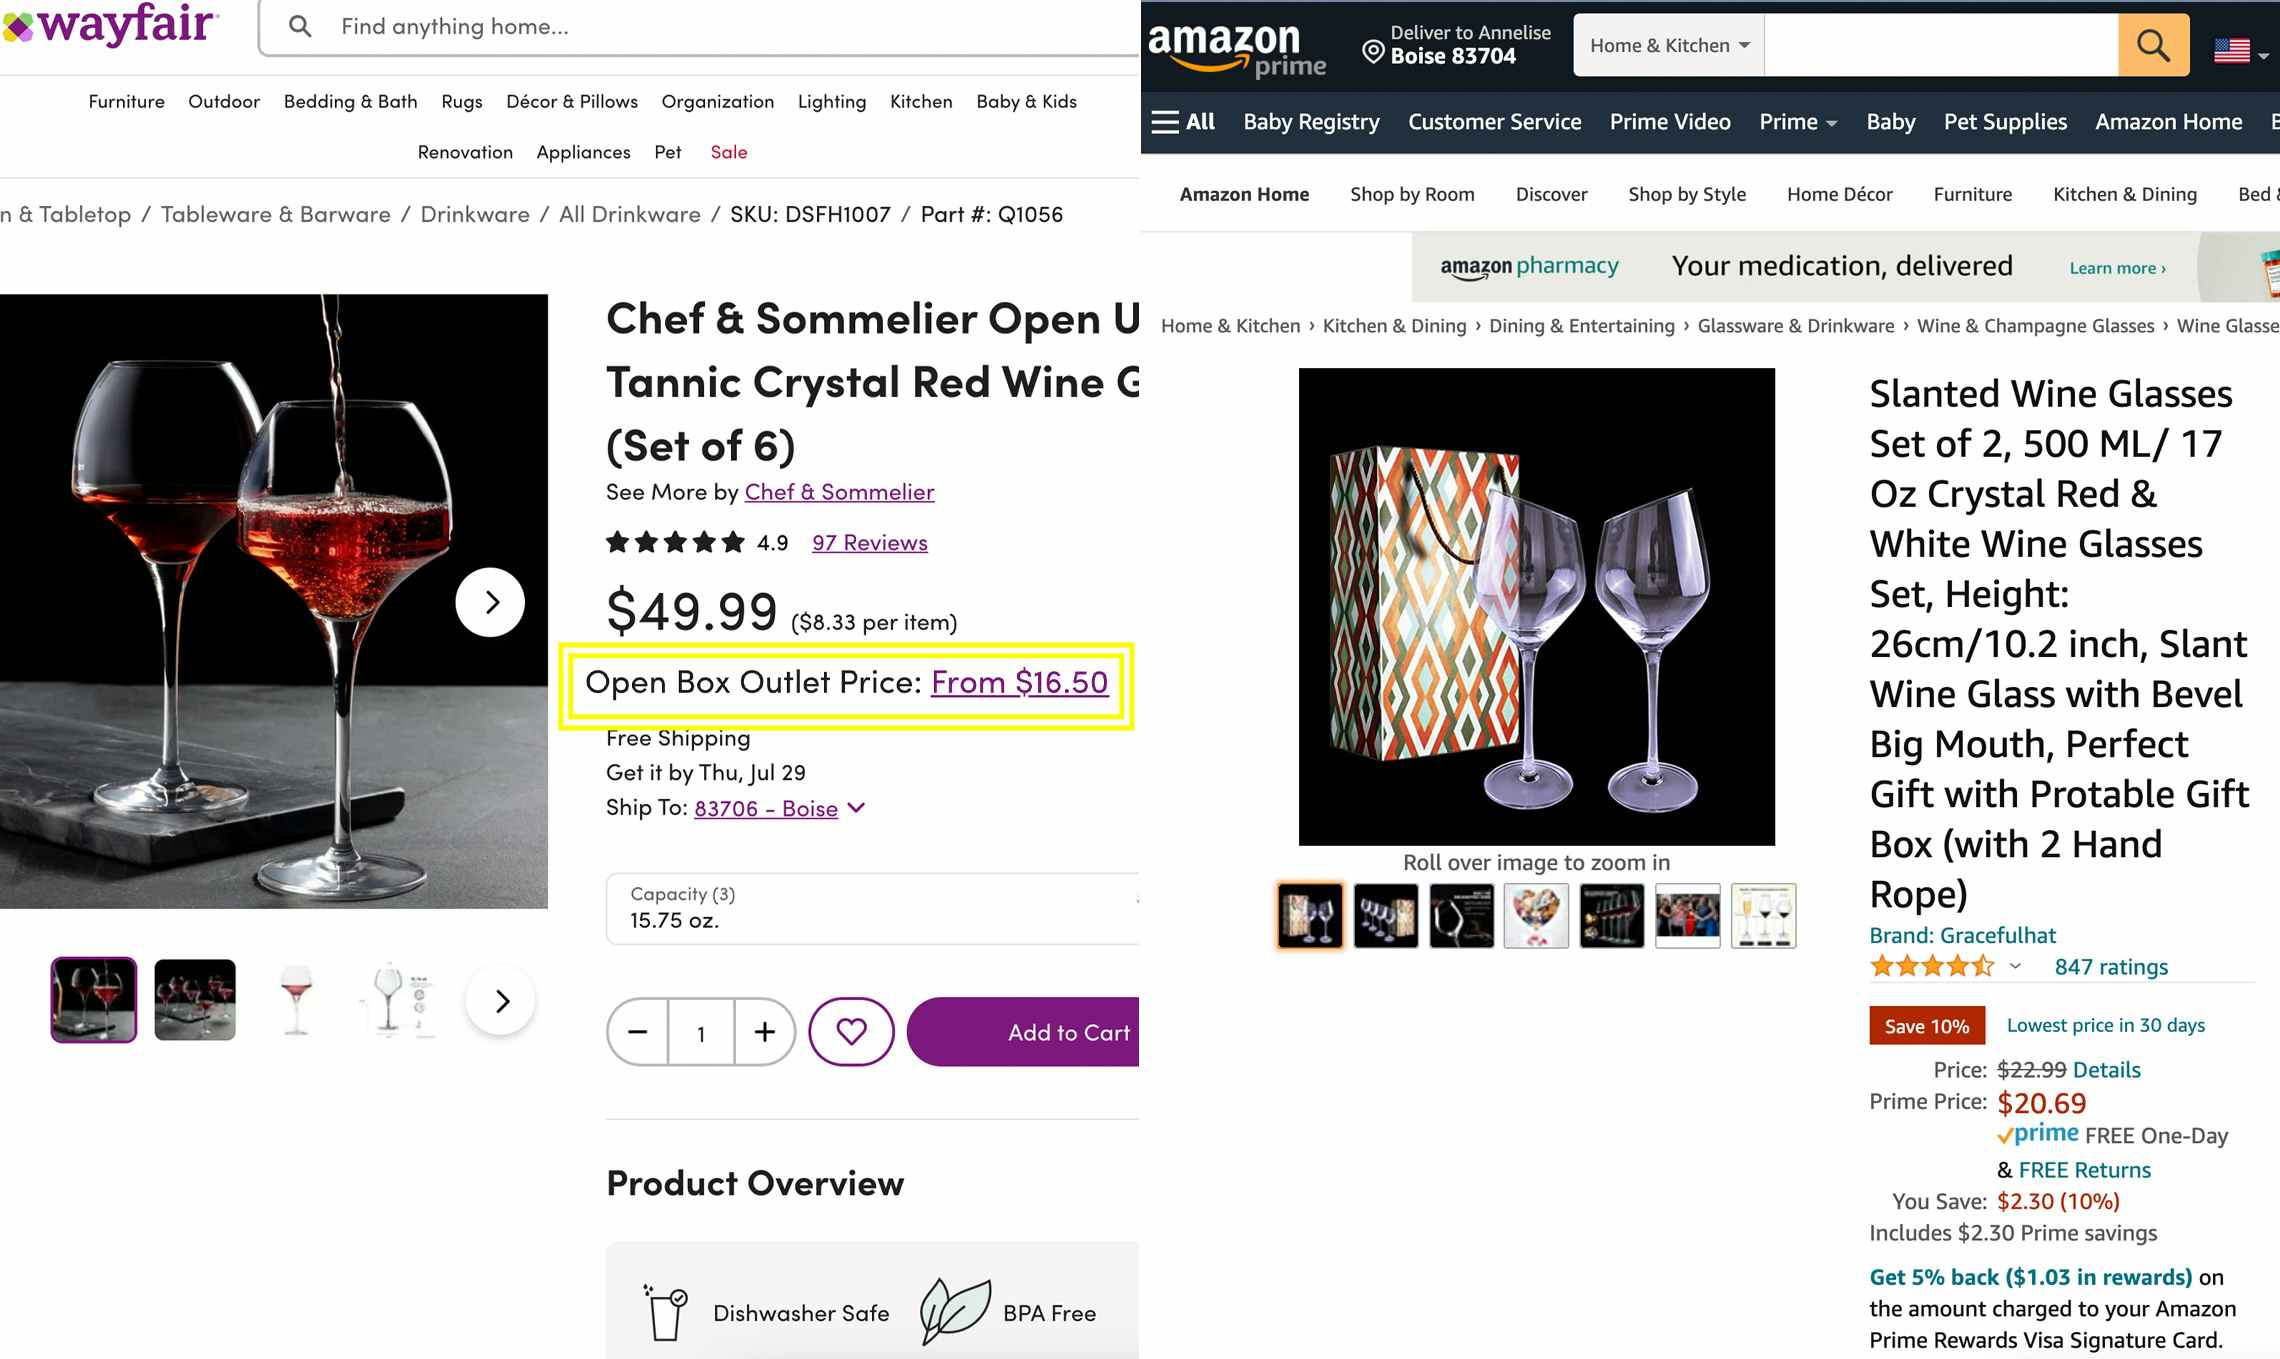 Wine glass comparison graphic between Wayfair and Amazon